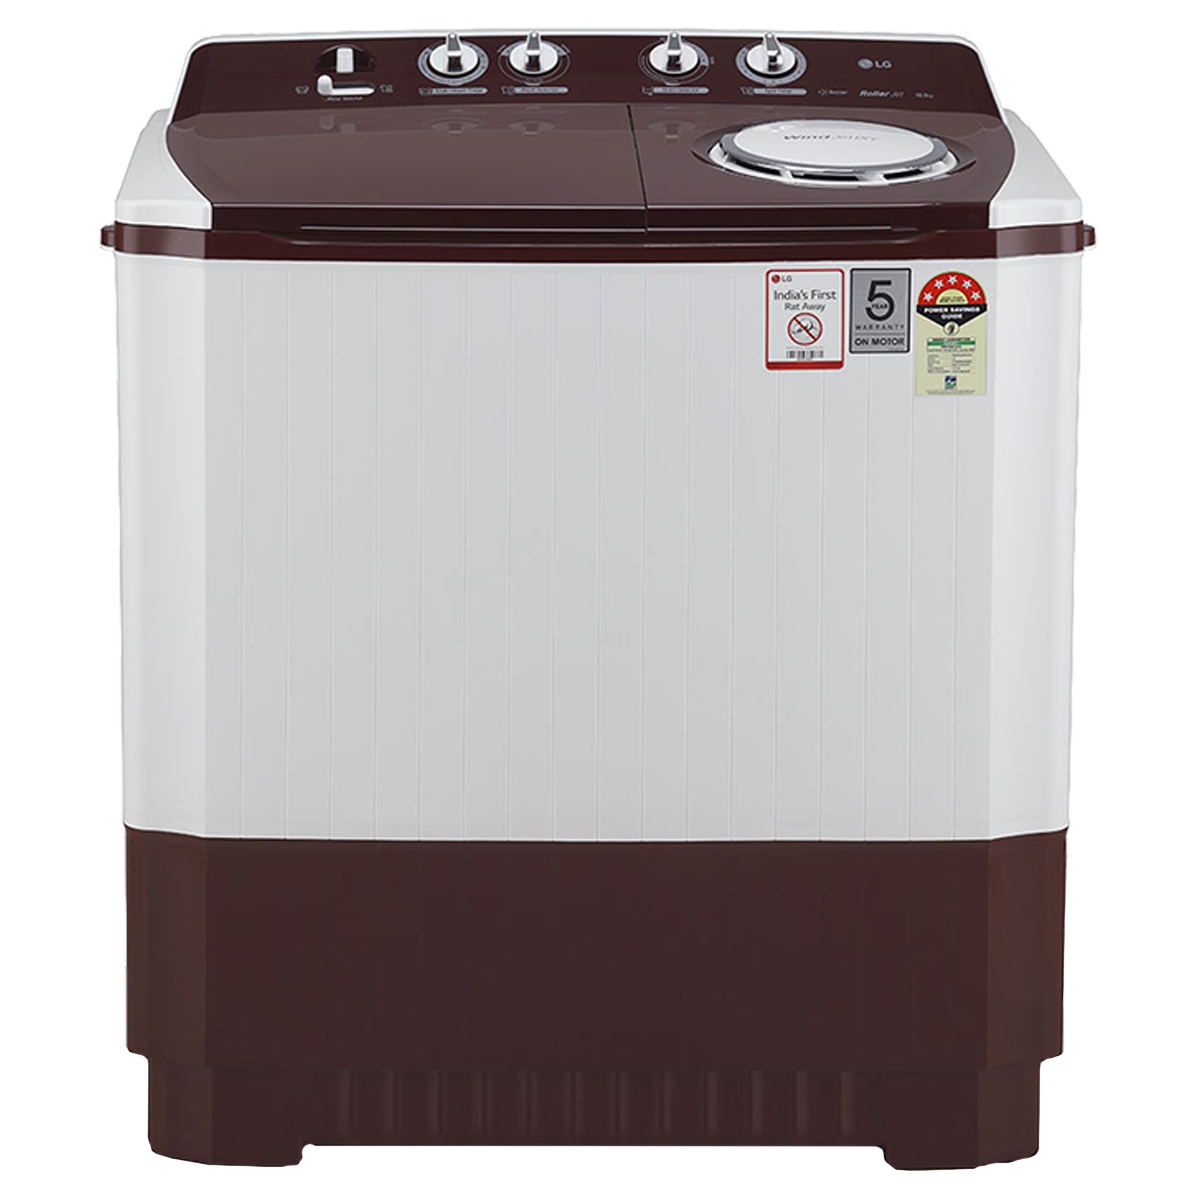 LG 10 kg 5 Star Semi-Automatic Top Load Washing Machine (Roller Jet Pulsator, P1040SRAZ.ABGQEIL, Burgundy)_1